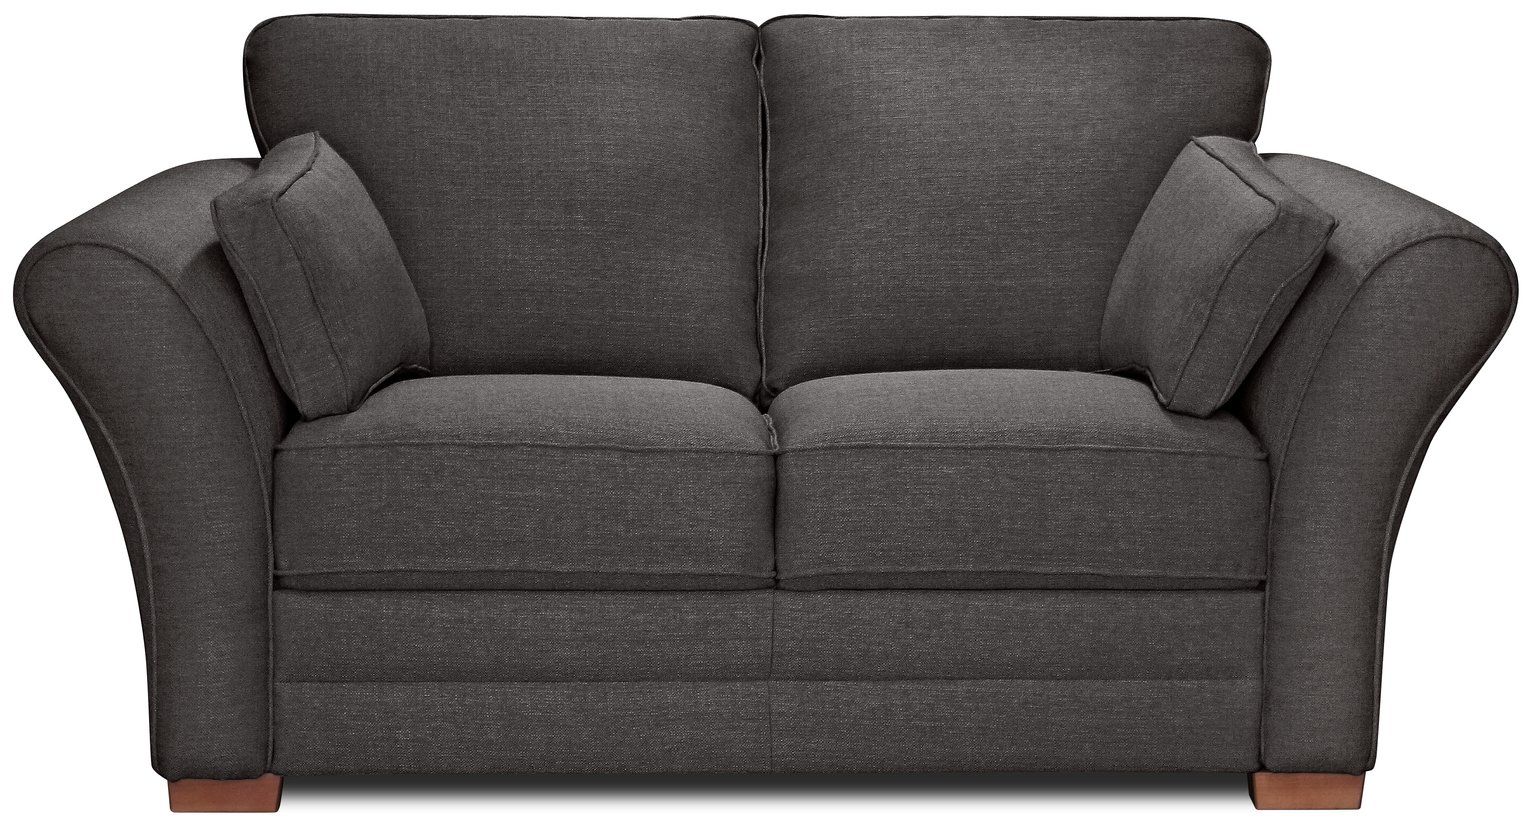 Argos Home Thornton 2 Seater Fabric Sofa - Charcoal